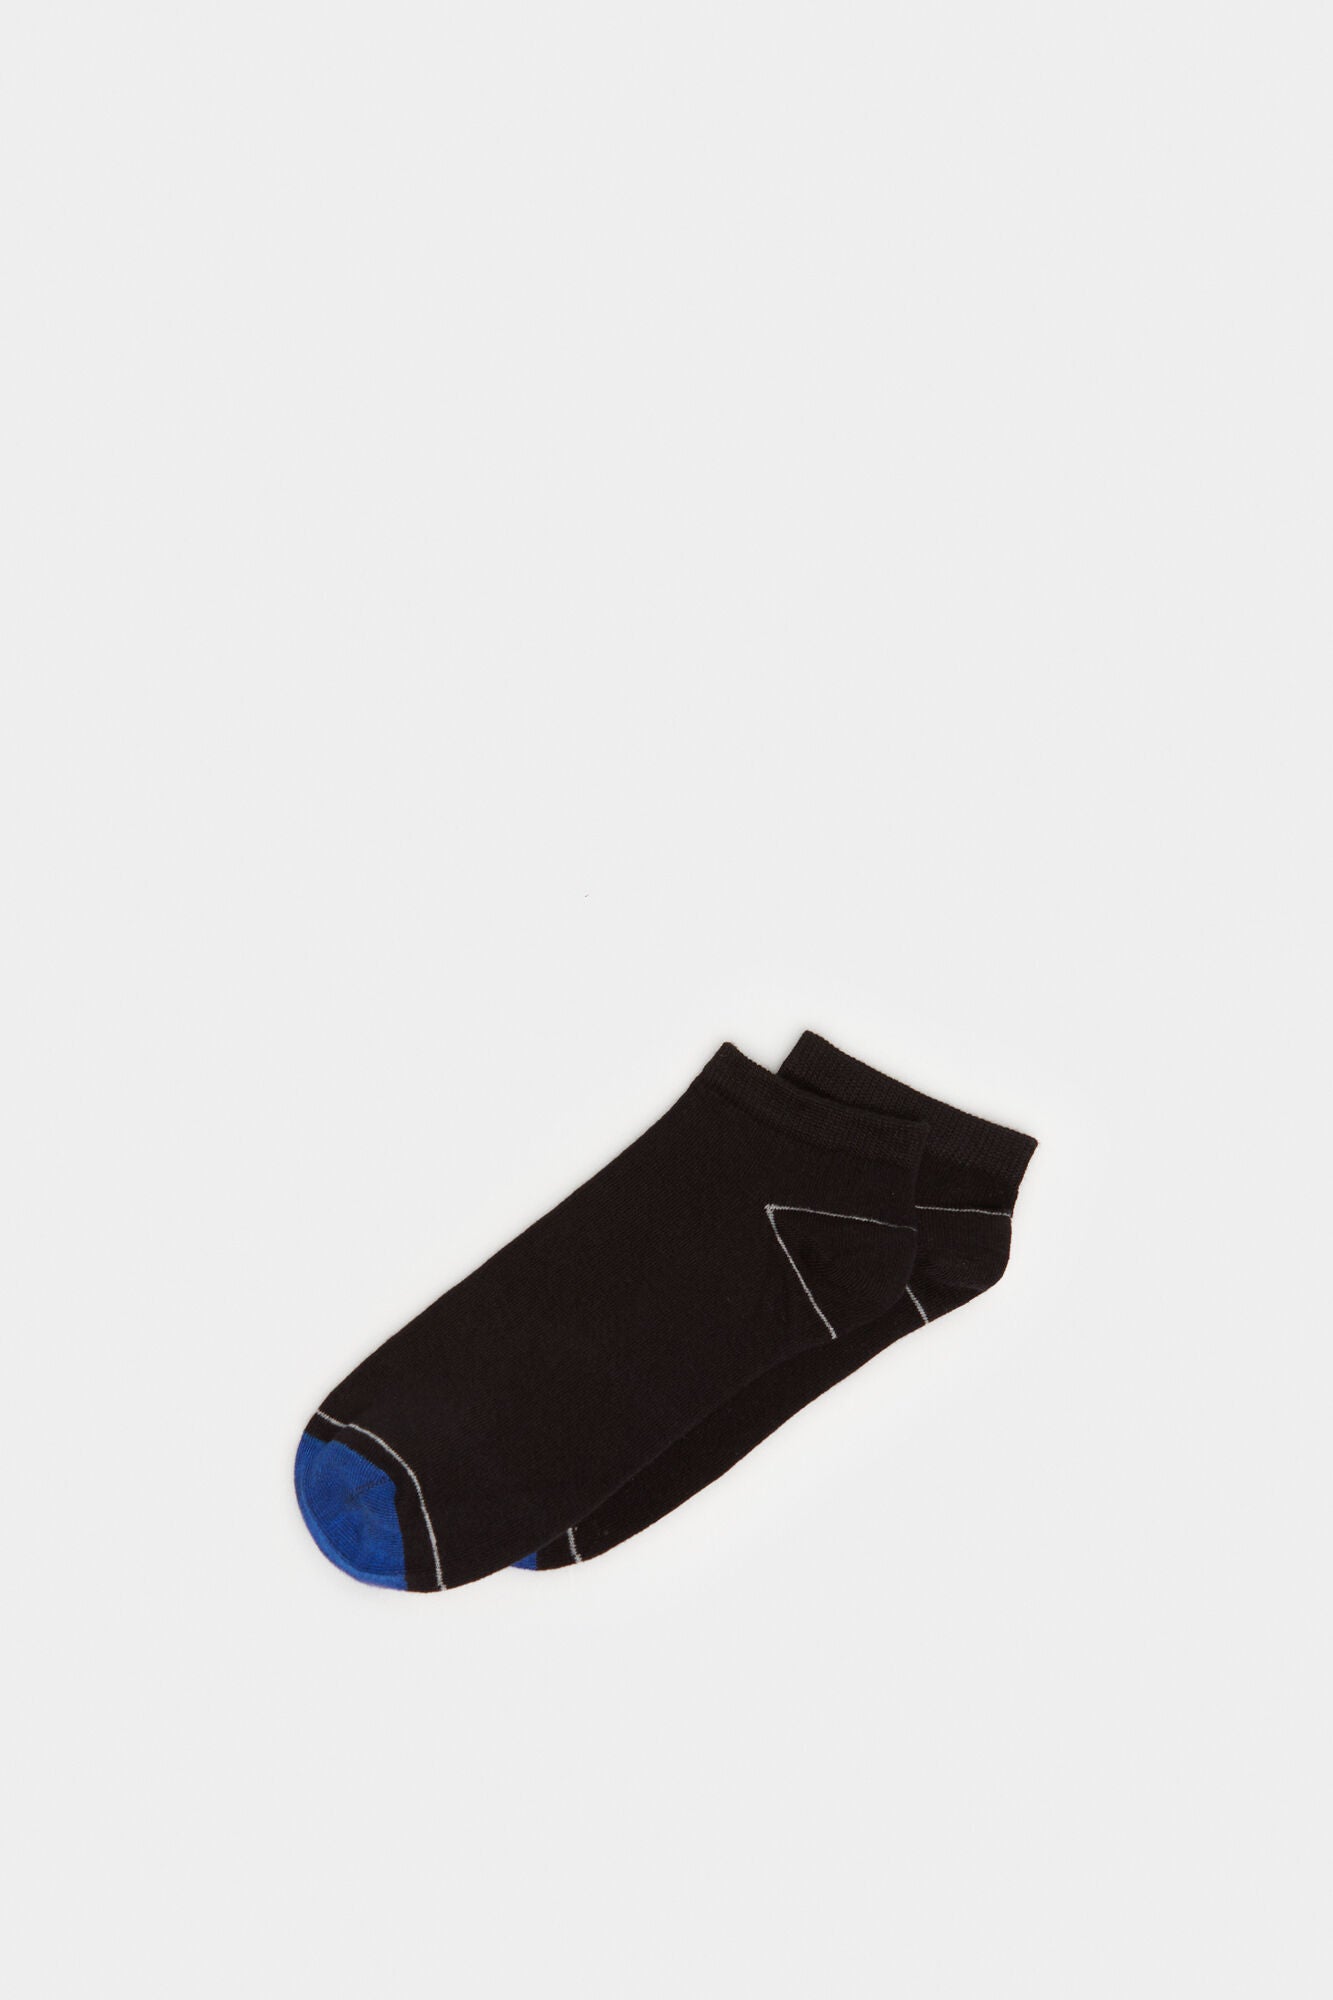 Black Socks - 1 Pair